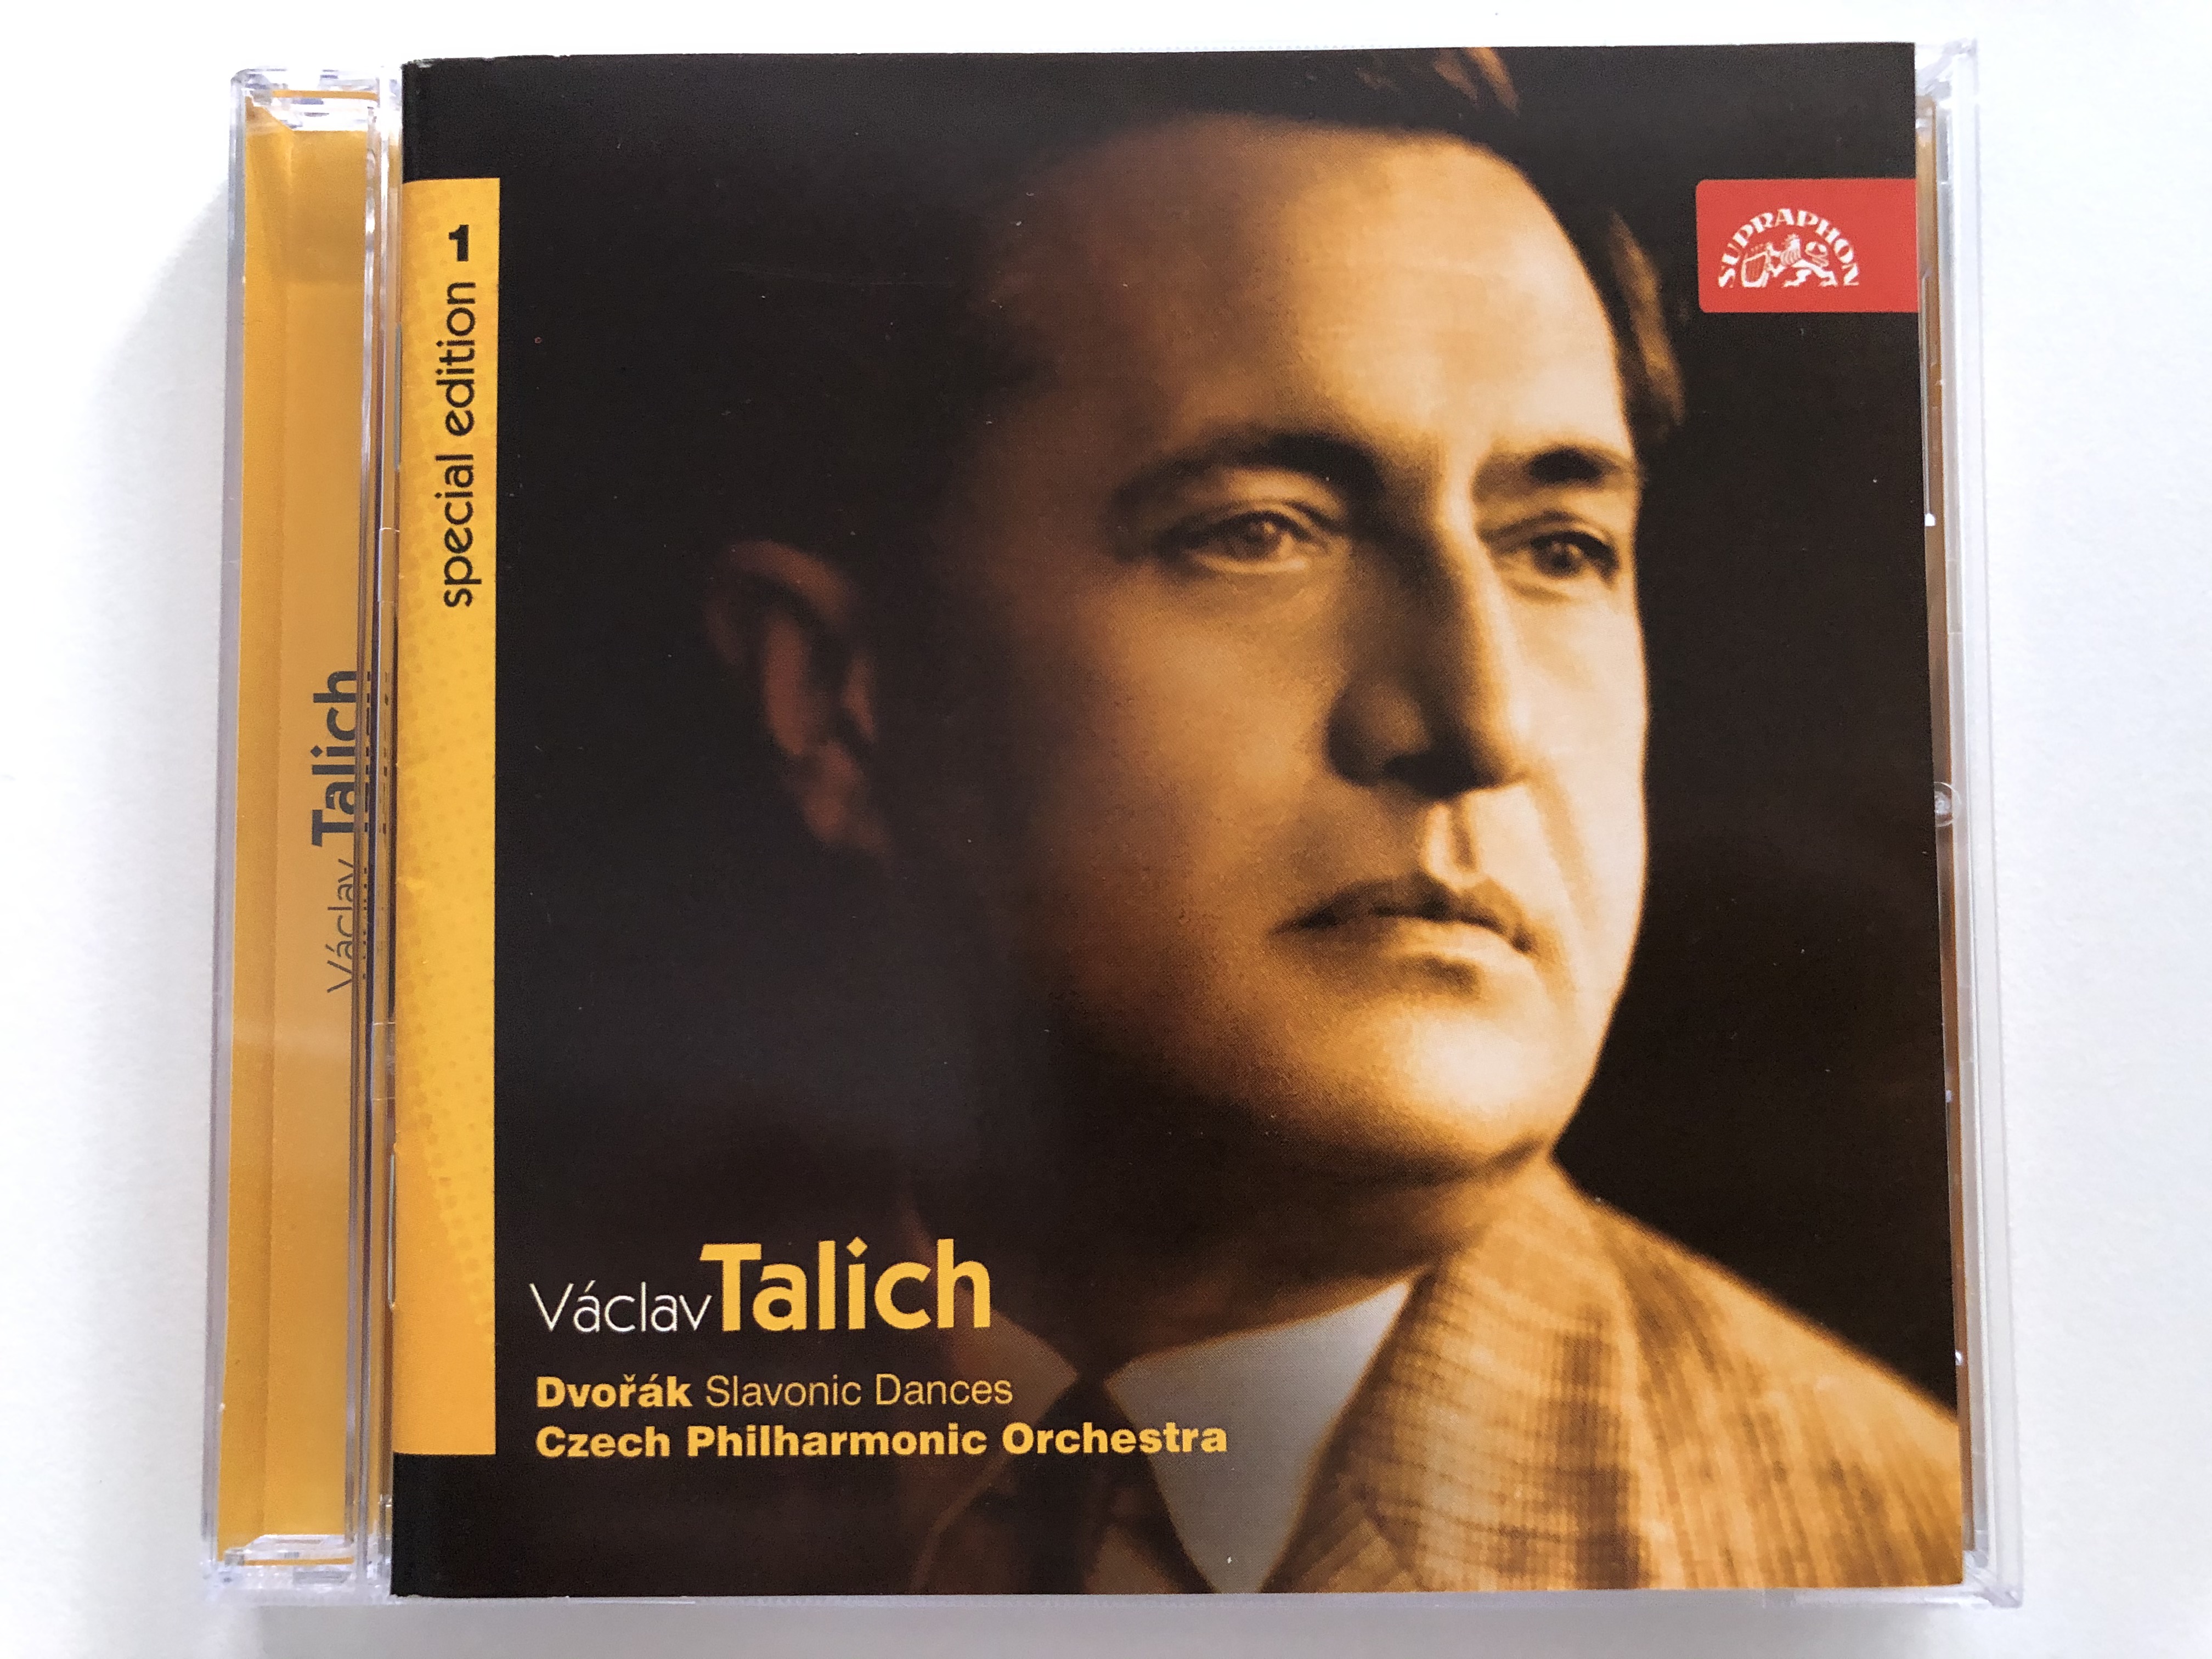 v-clav-talich-special-edition-1-dvo-k-slavonic-dances-czech-philharmonic-orchestra-supraphon-audio-cd-2005-su-3821-2-1-.jpg